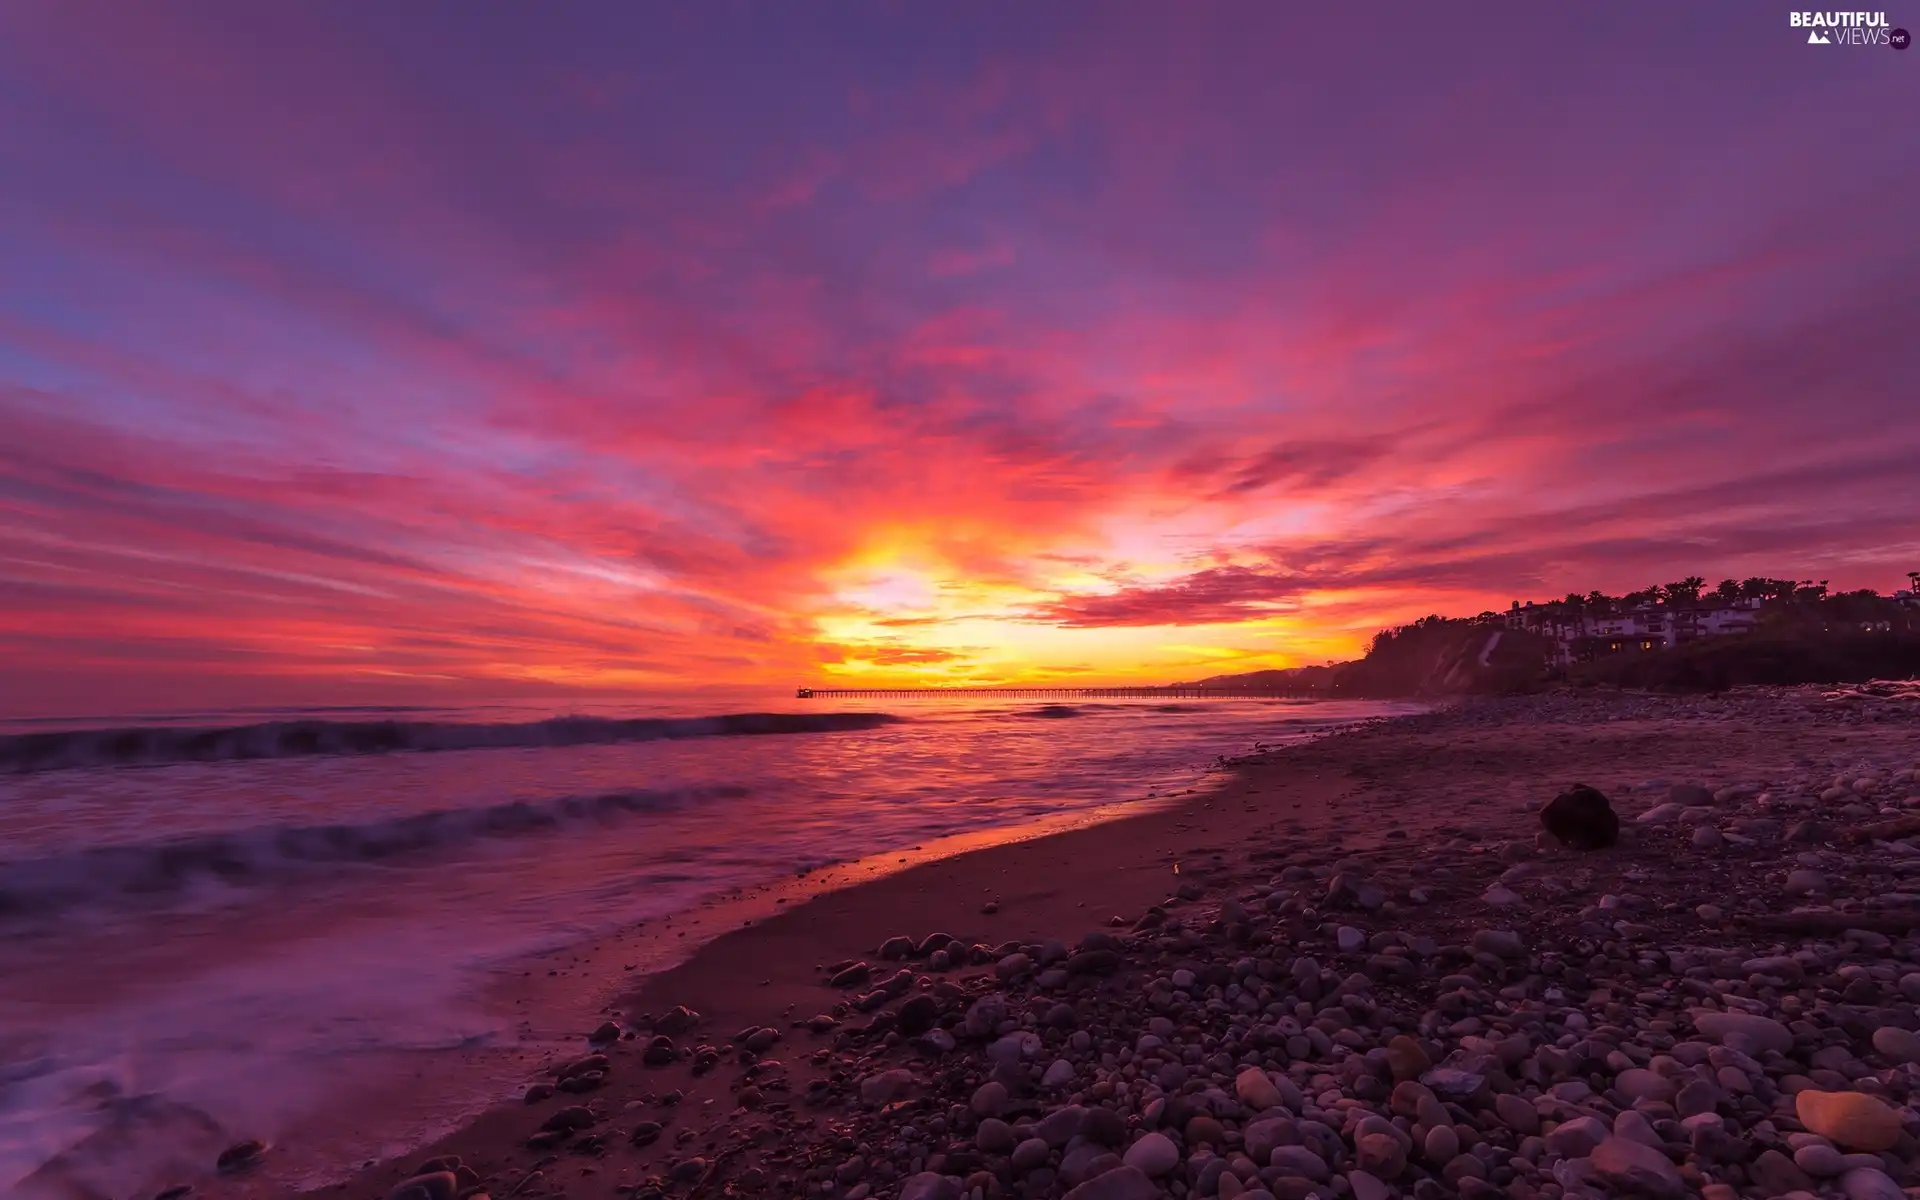 Beaches, sea, El Capitan State Beach, Stones, State of California, The United States, Great Sunsets, Santa Barbara, pier